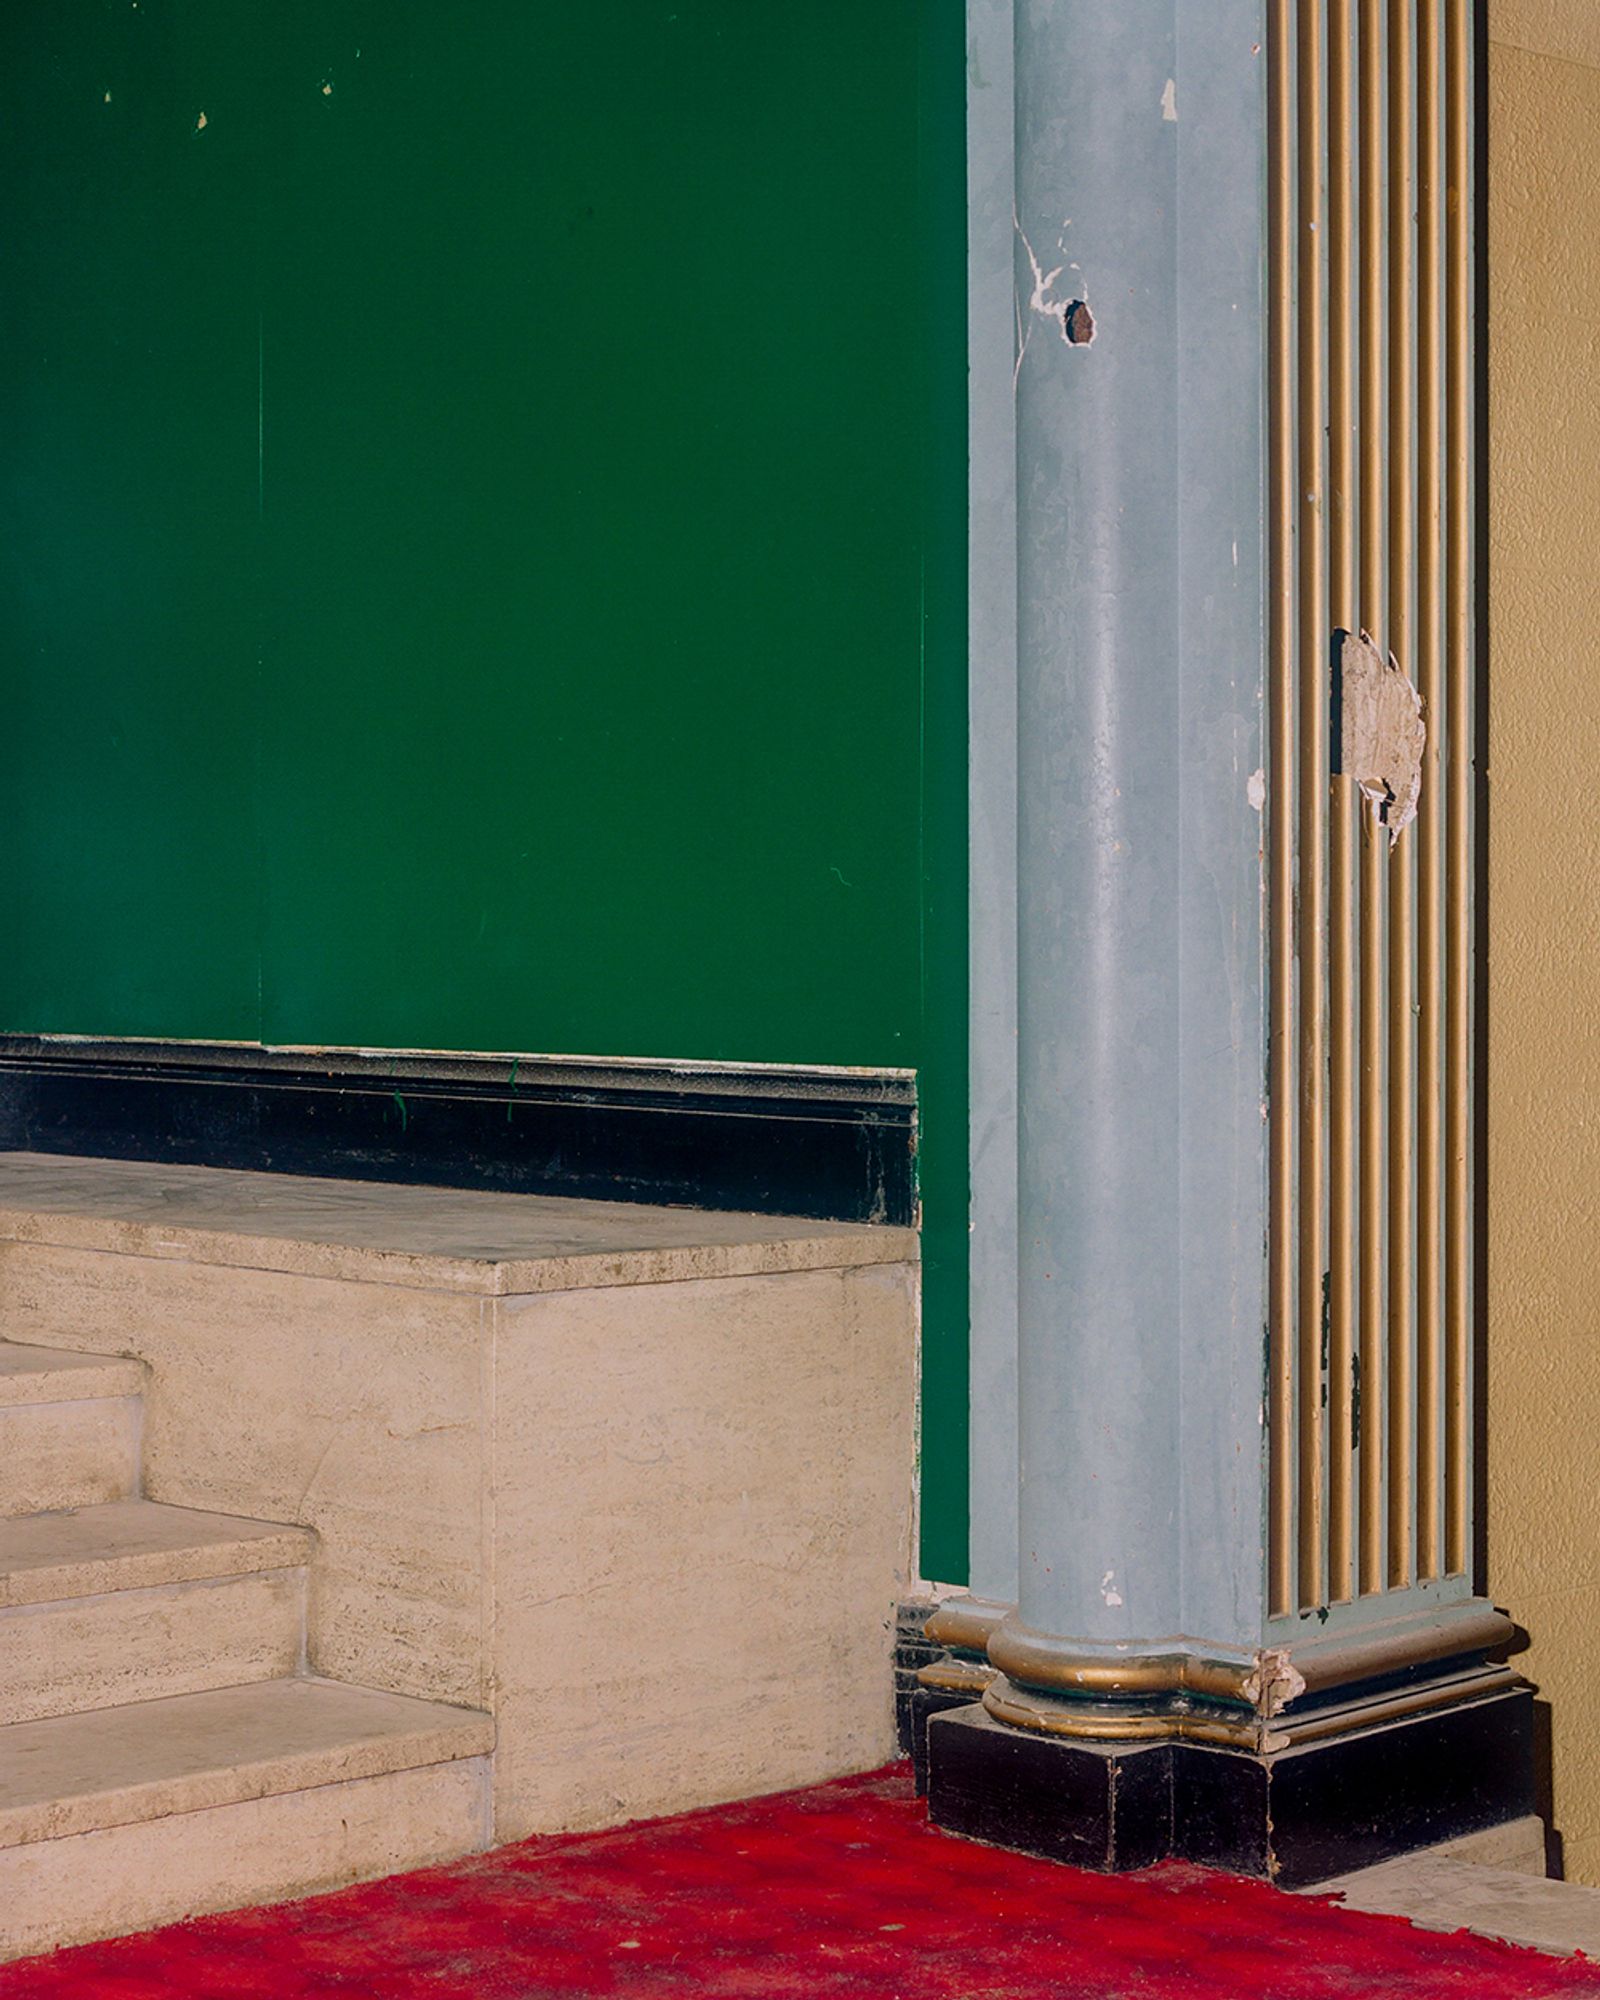 © Henri Kisielewski - Memory #30, (2021). London. Kodak colour negative film, 6x7.